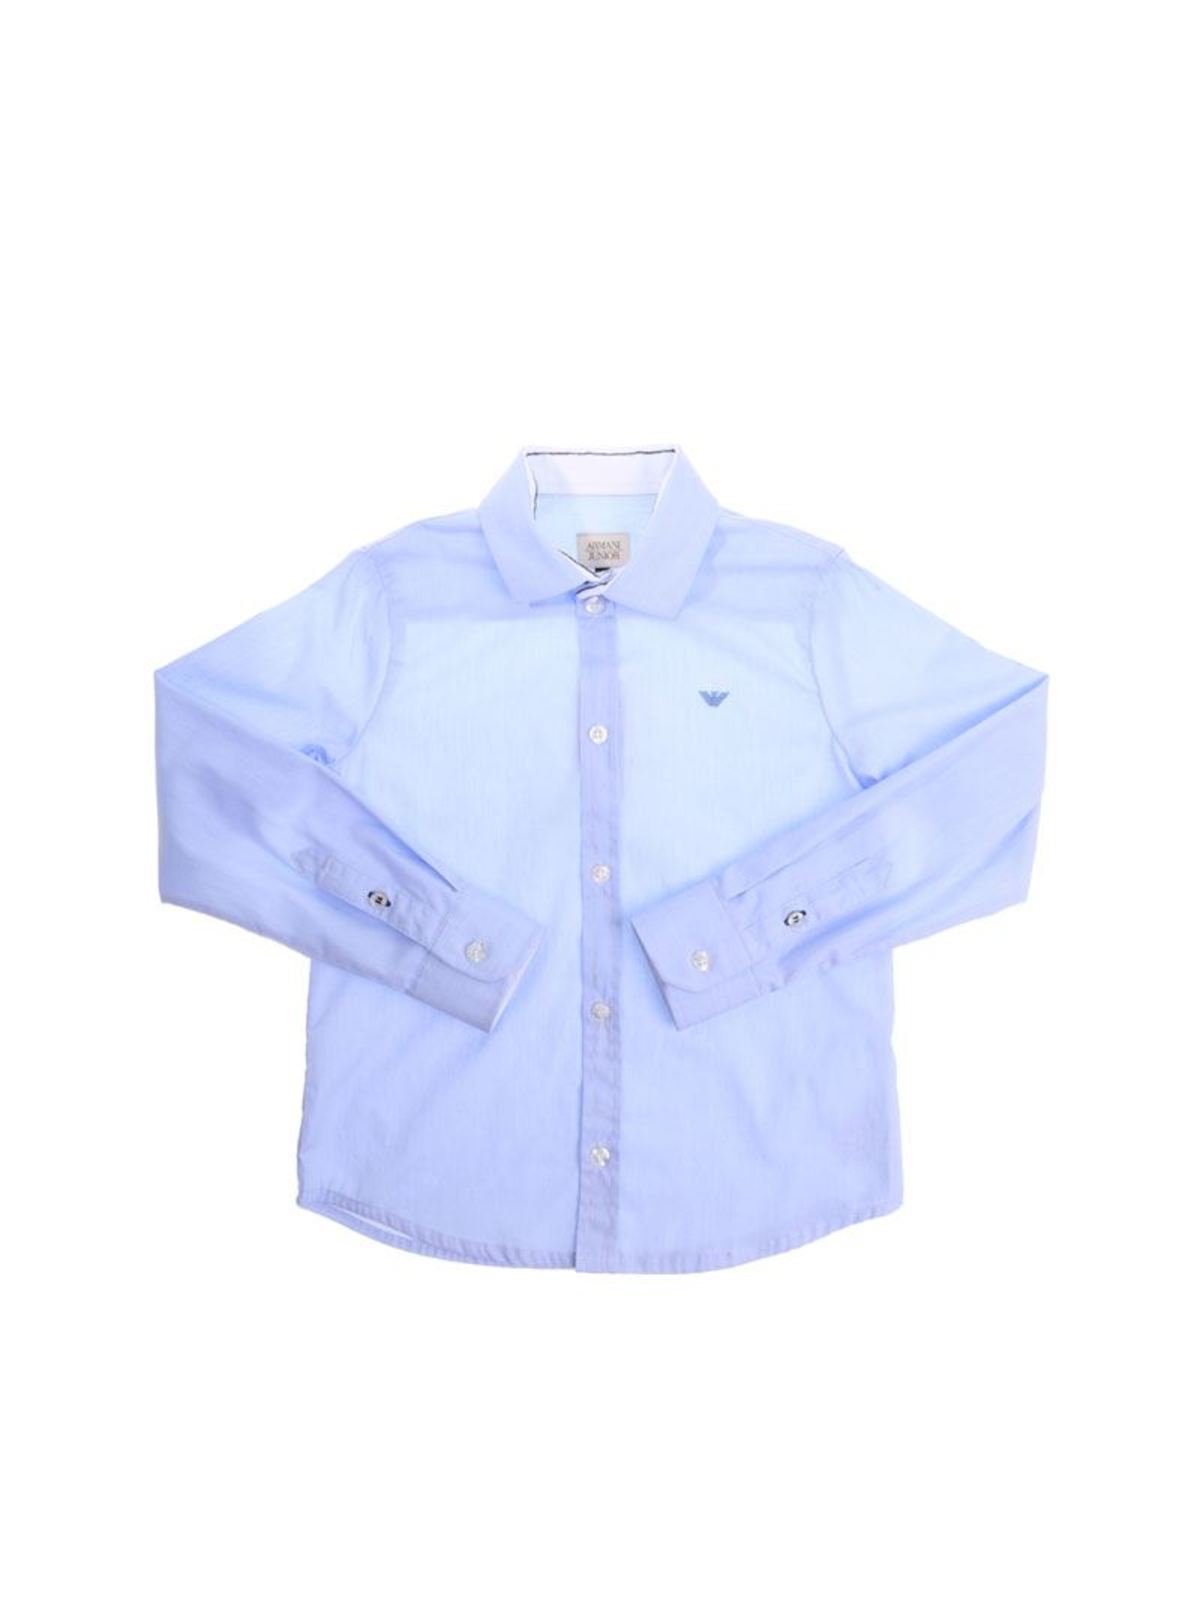 Camisas Armani Jr - Camisa - Azul